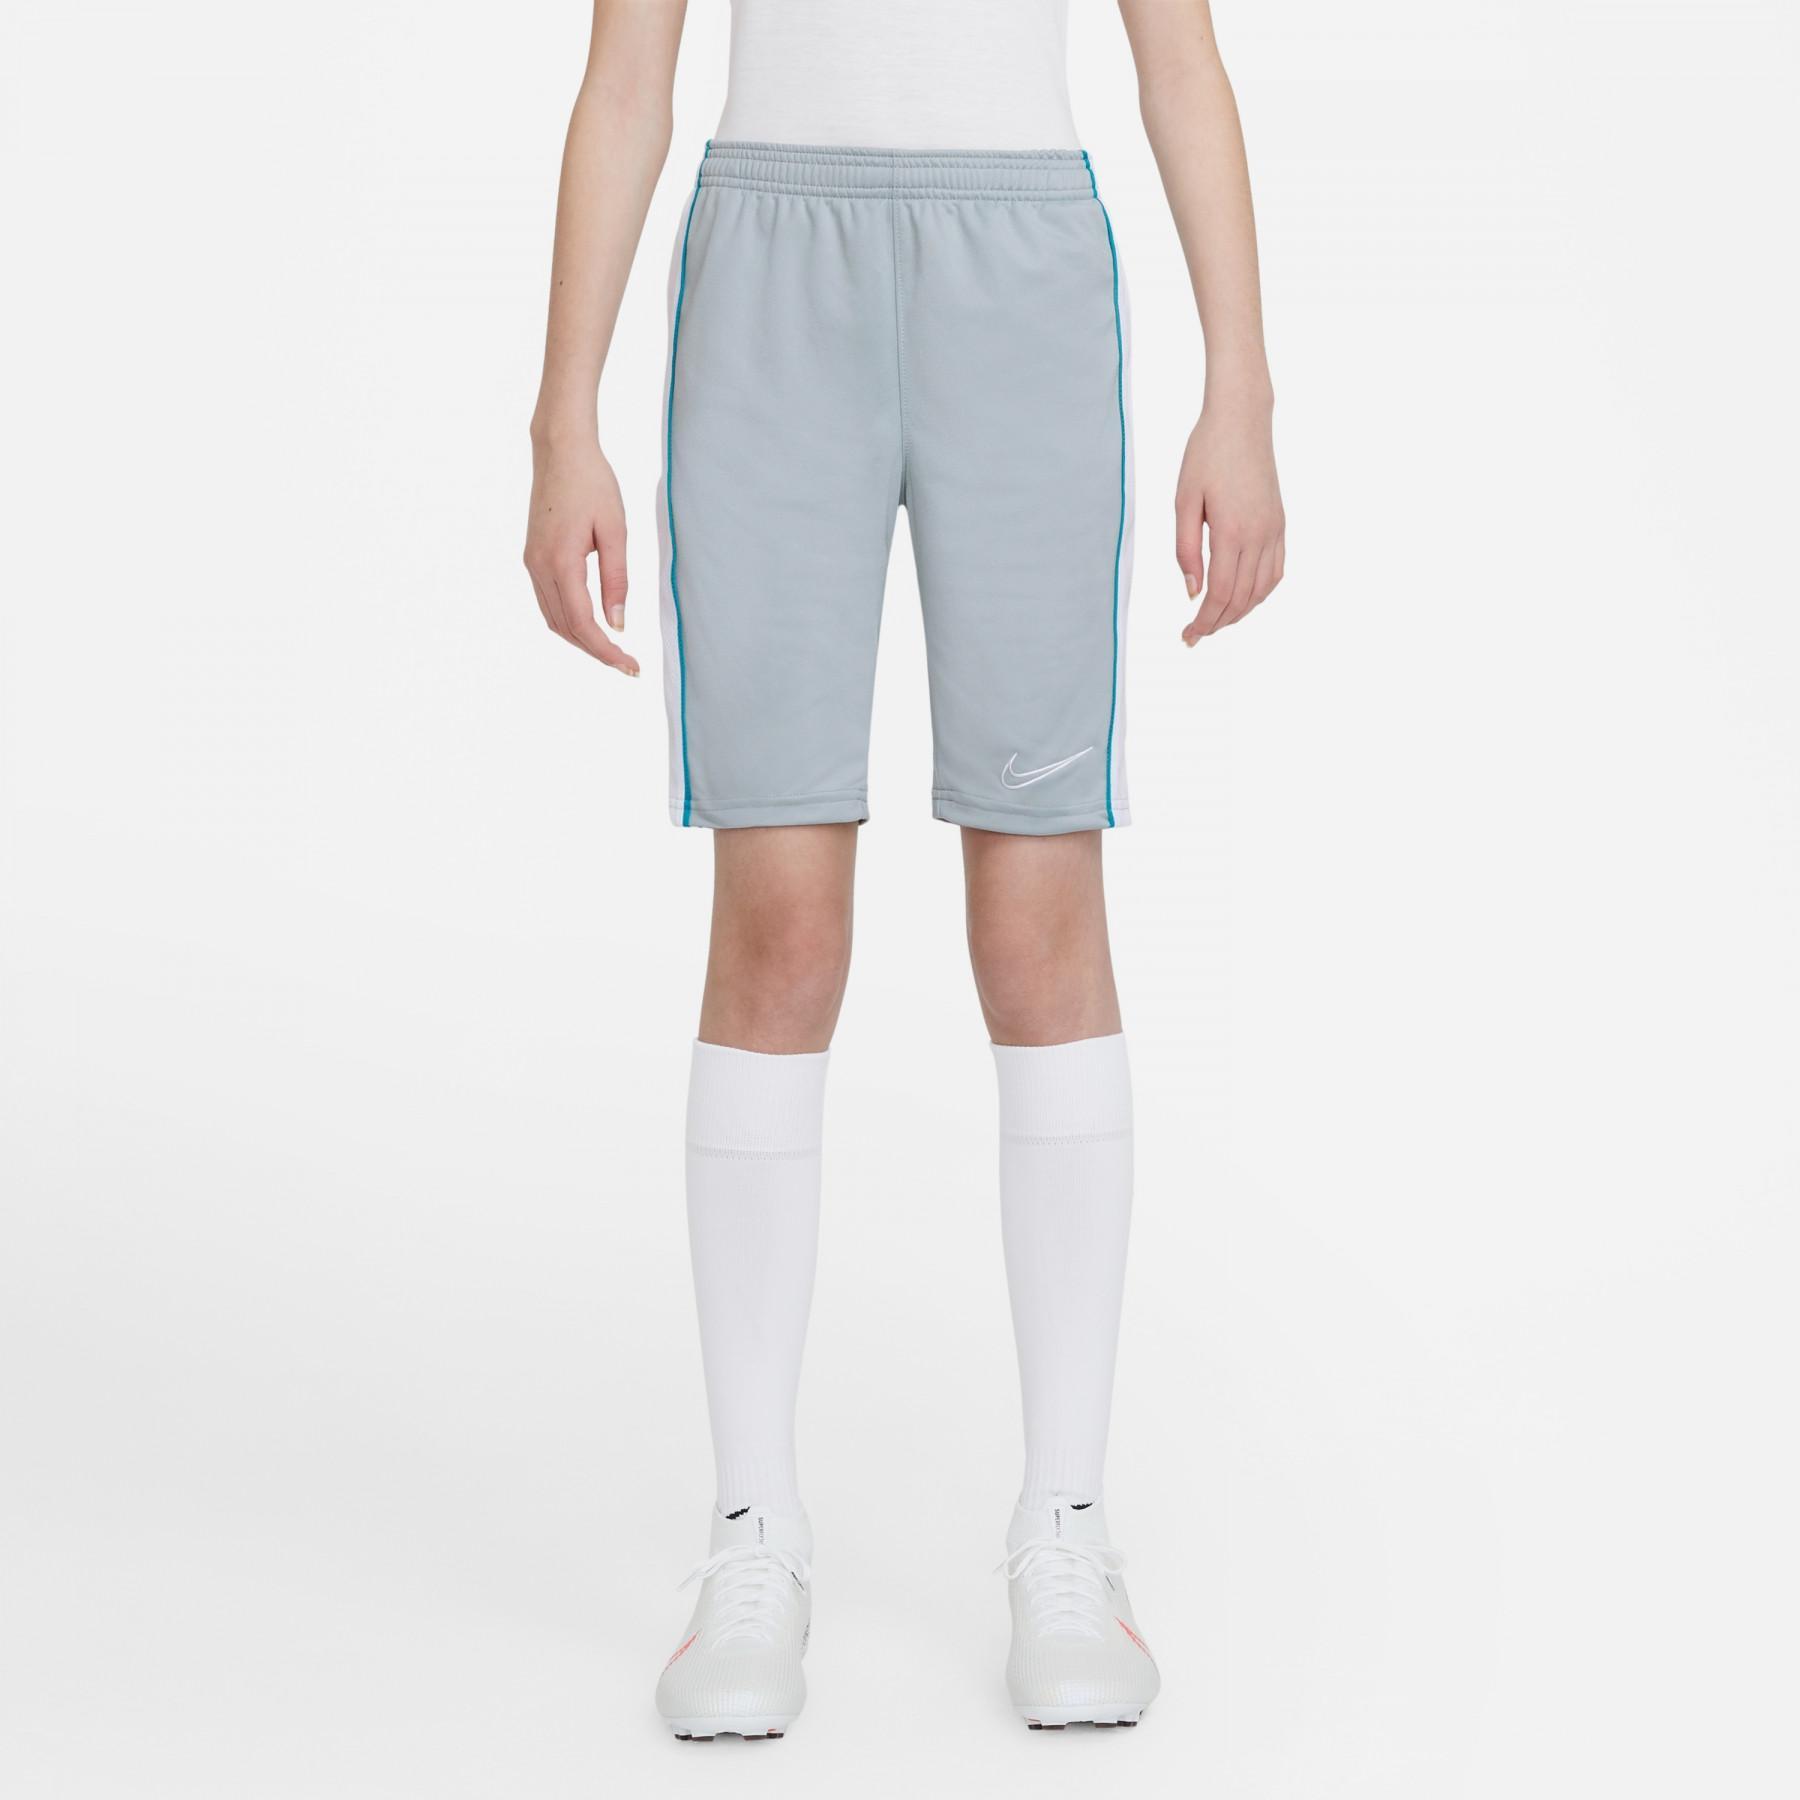 Children's shorts Nike M ACD M18